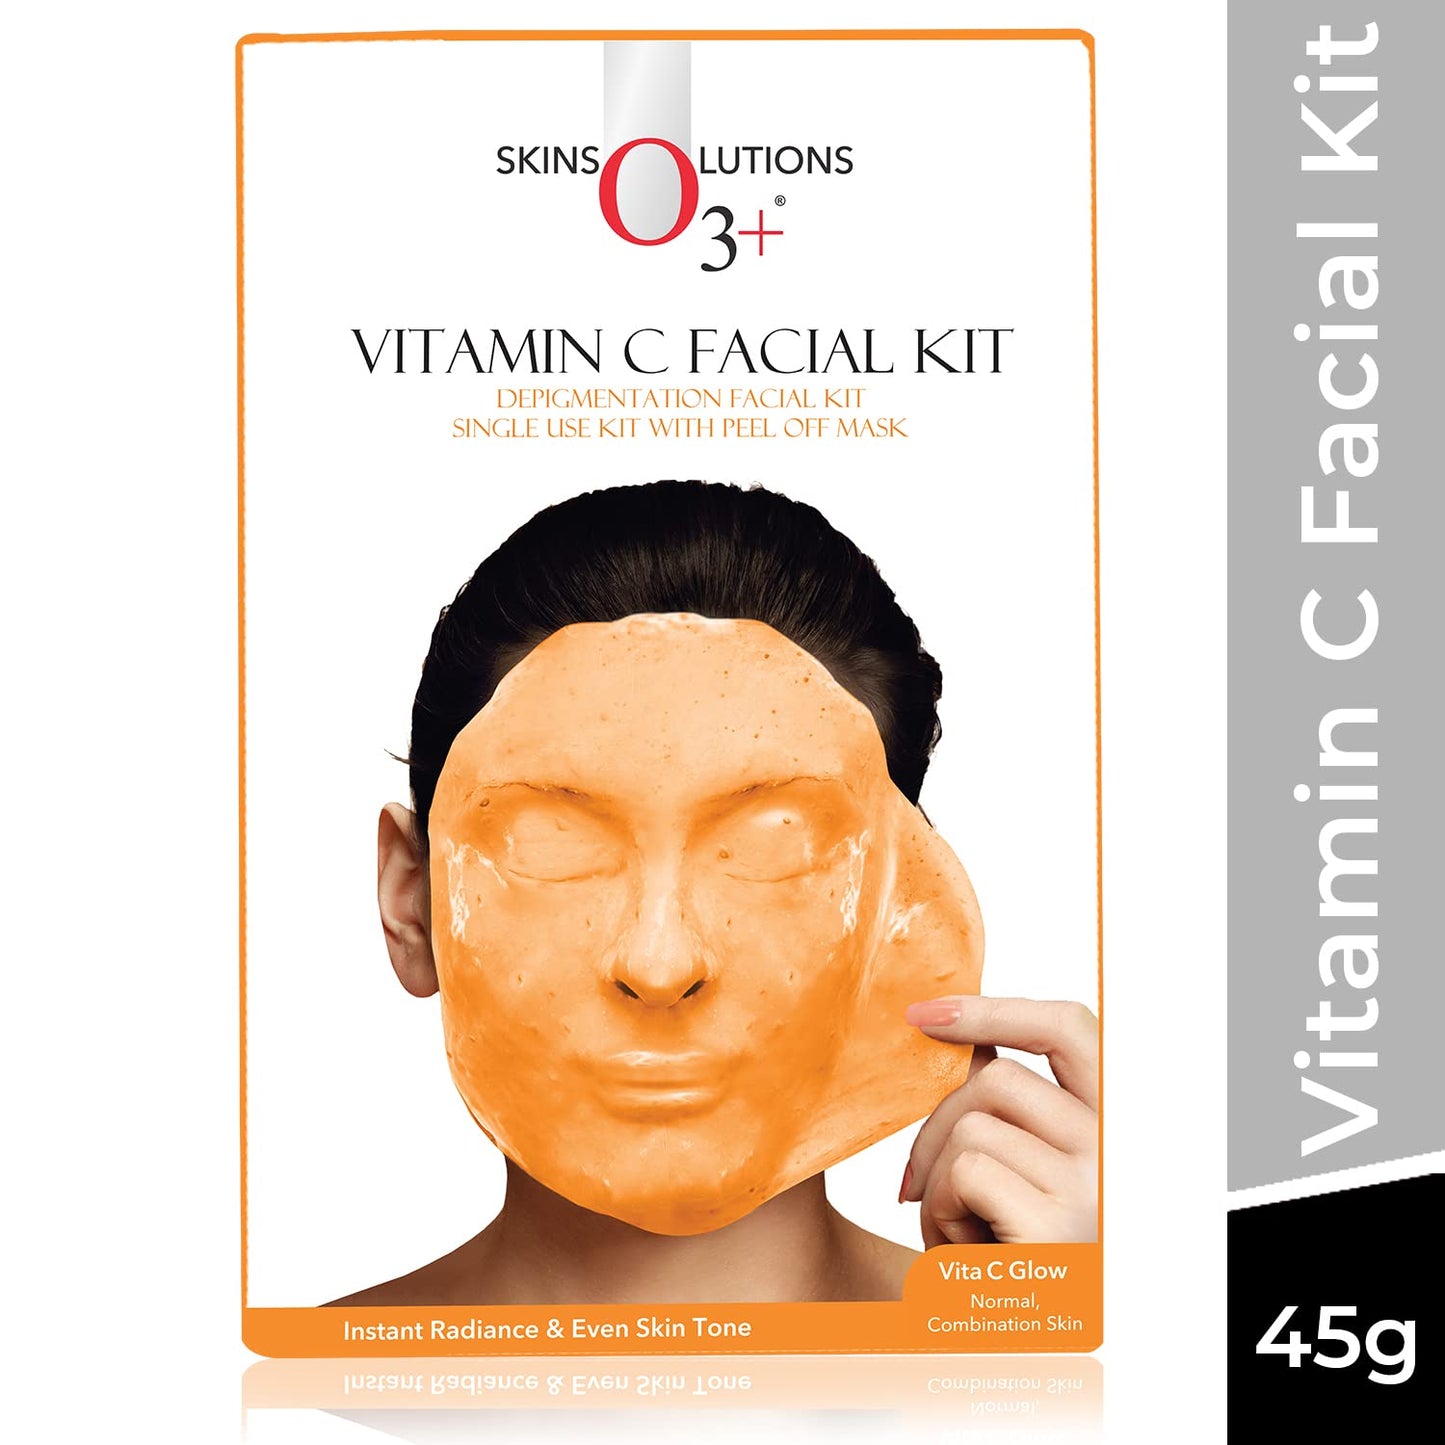 O3+ Depigmentation Facial kit with Peel Off Mask